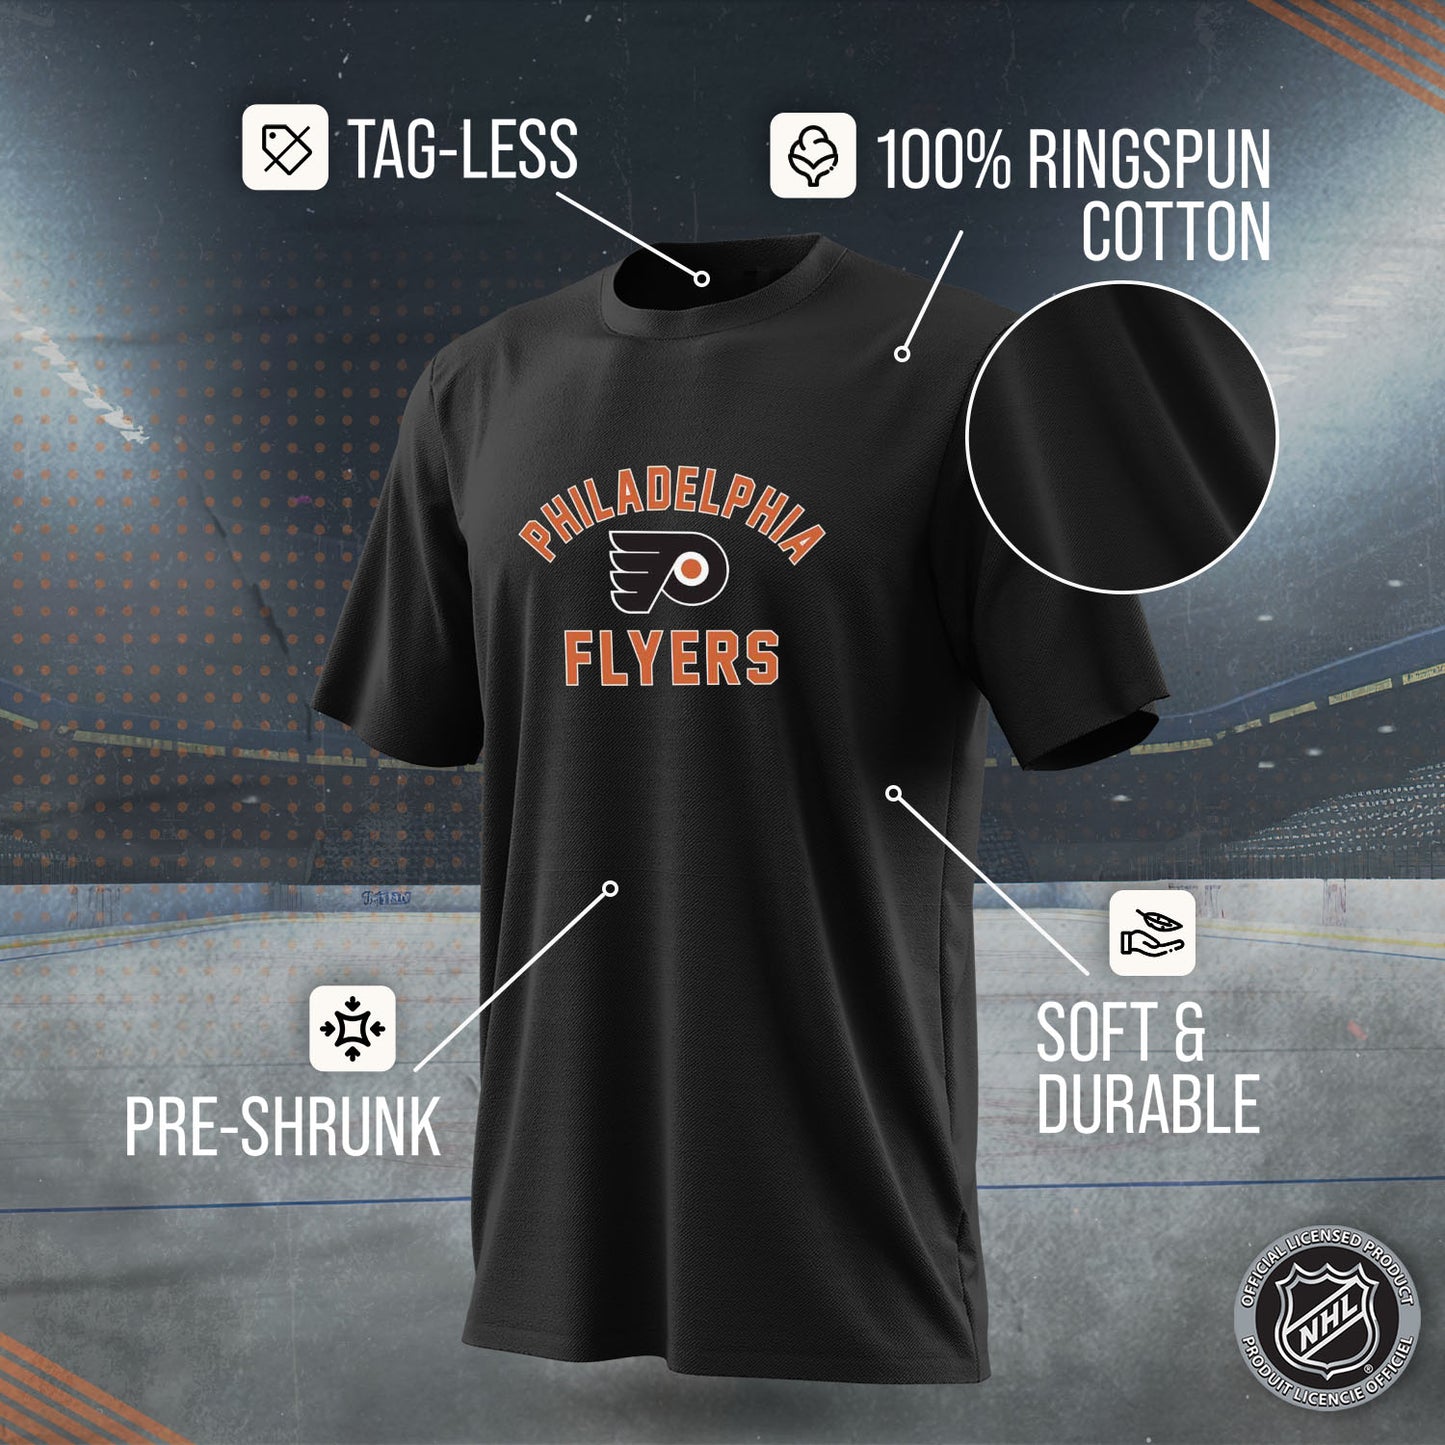 Philadelphia Flyers NHL Adult Game Day Unisex T-Shirt - Black